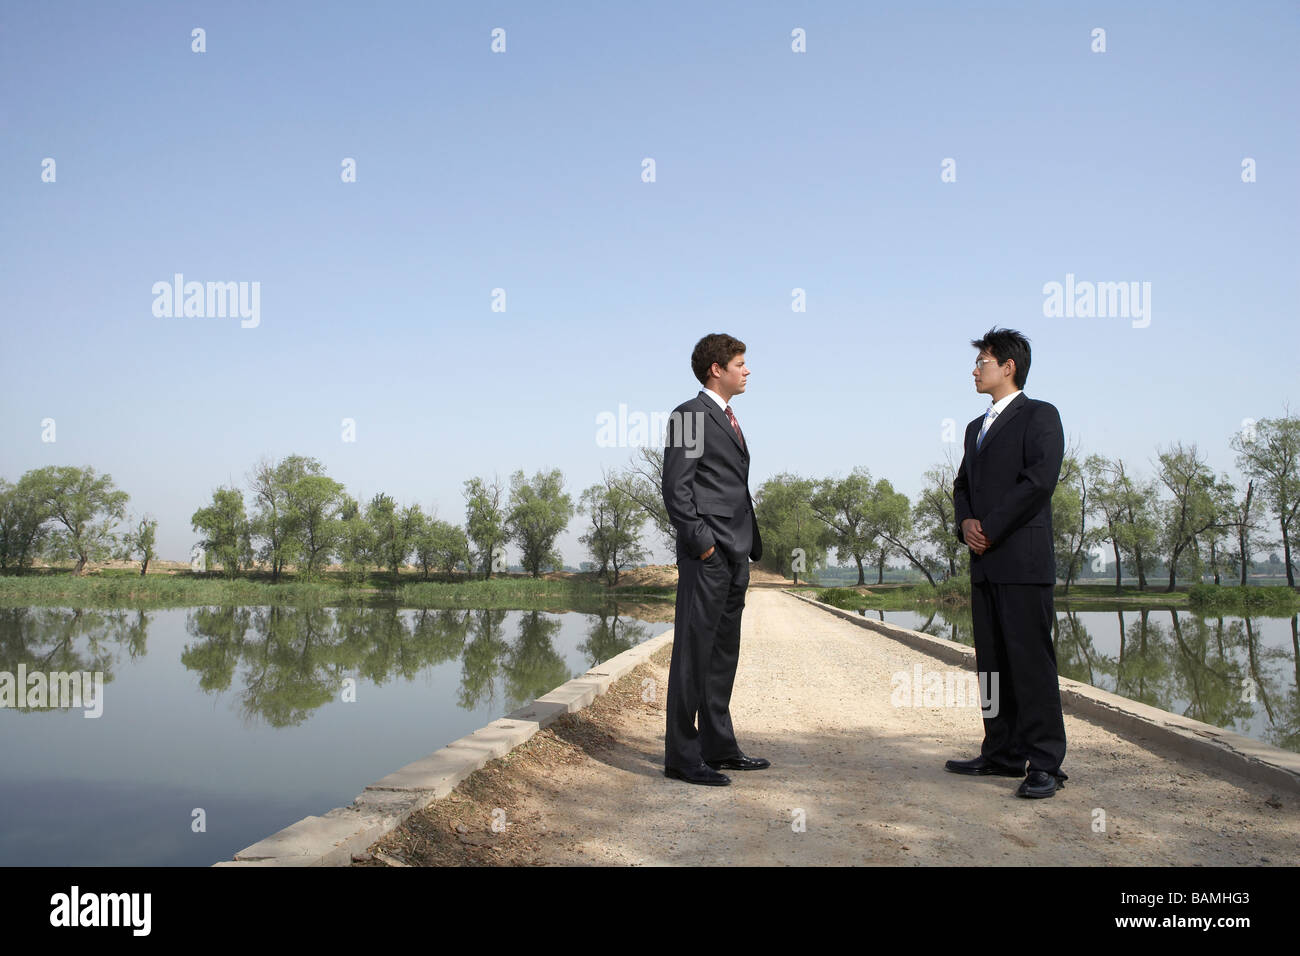 Businessmen Standing Next To A Lake On A Bridge Stock Photo